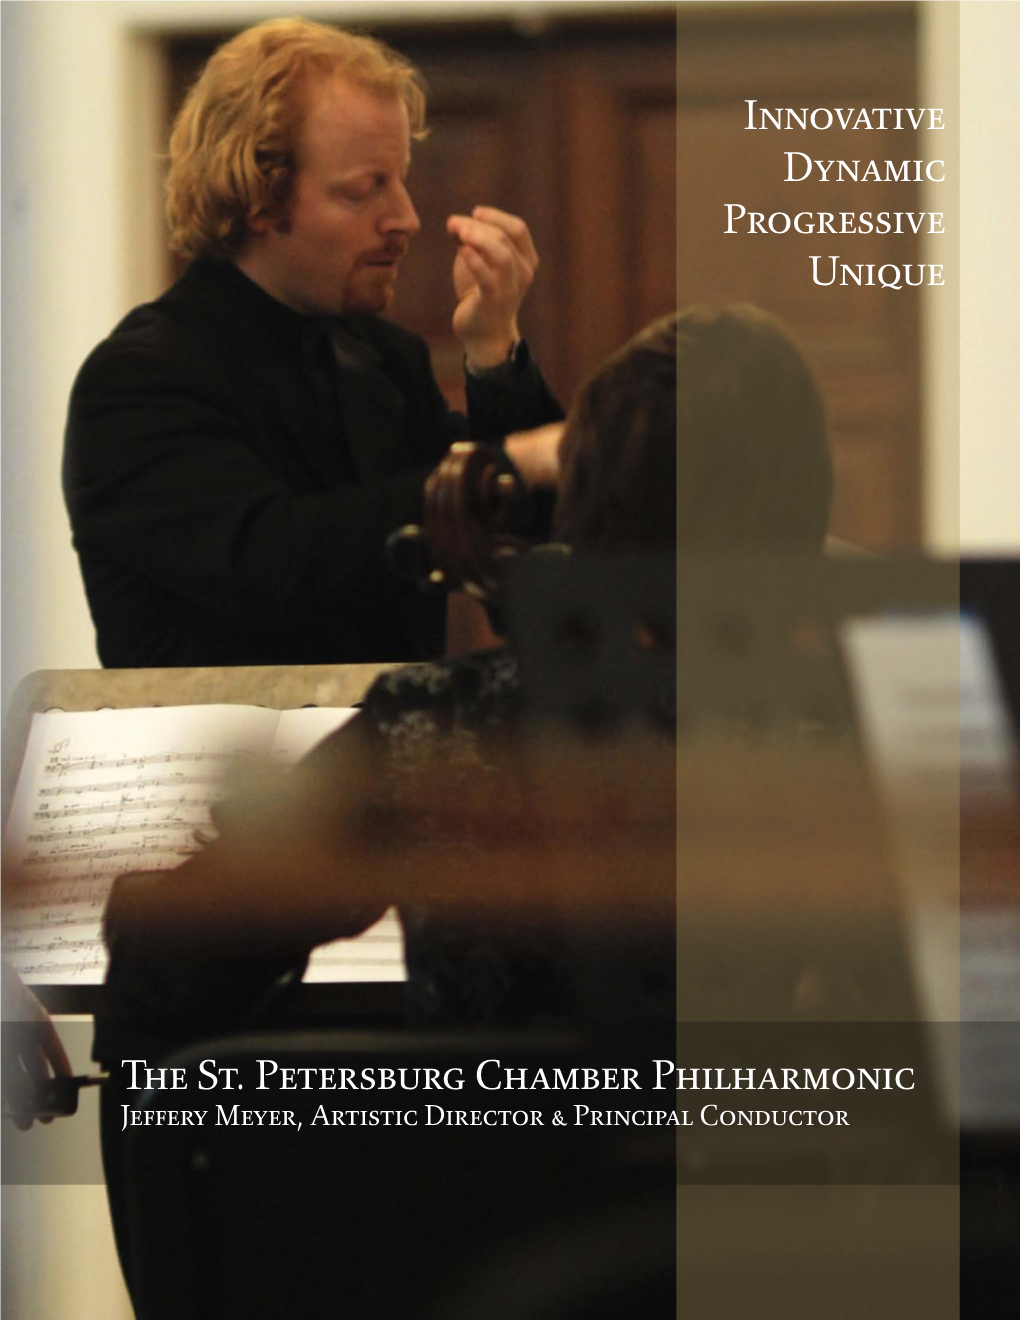 The St. Petersburg Chamber Philharmonic Innovative Dynamic